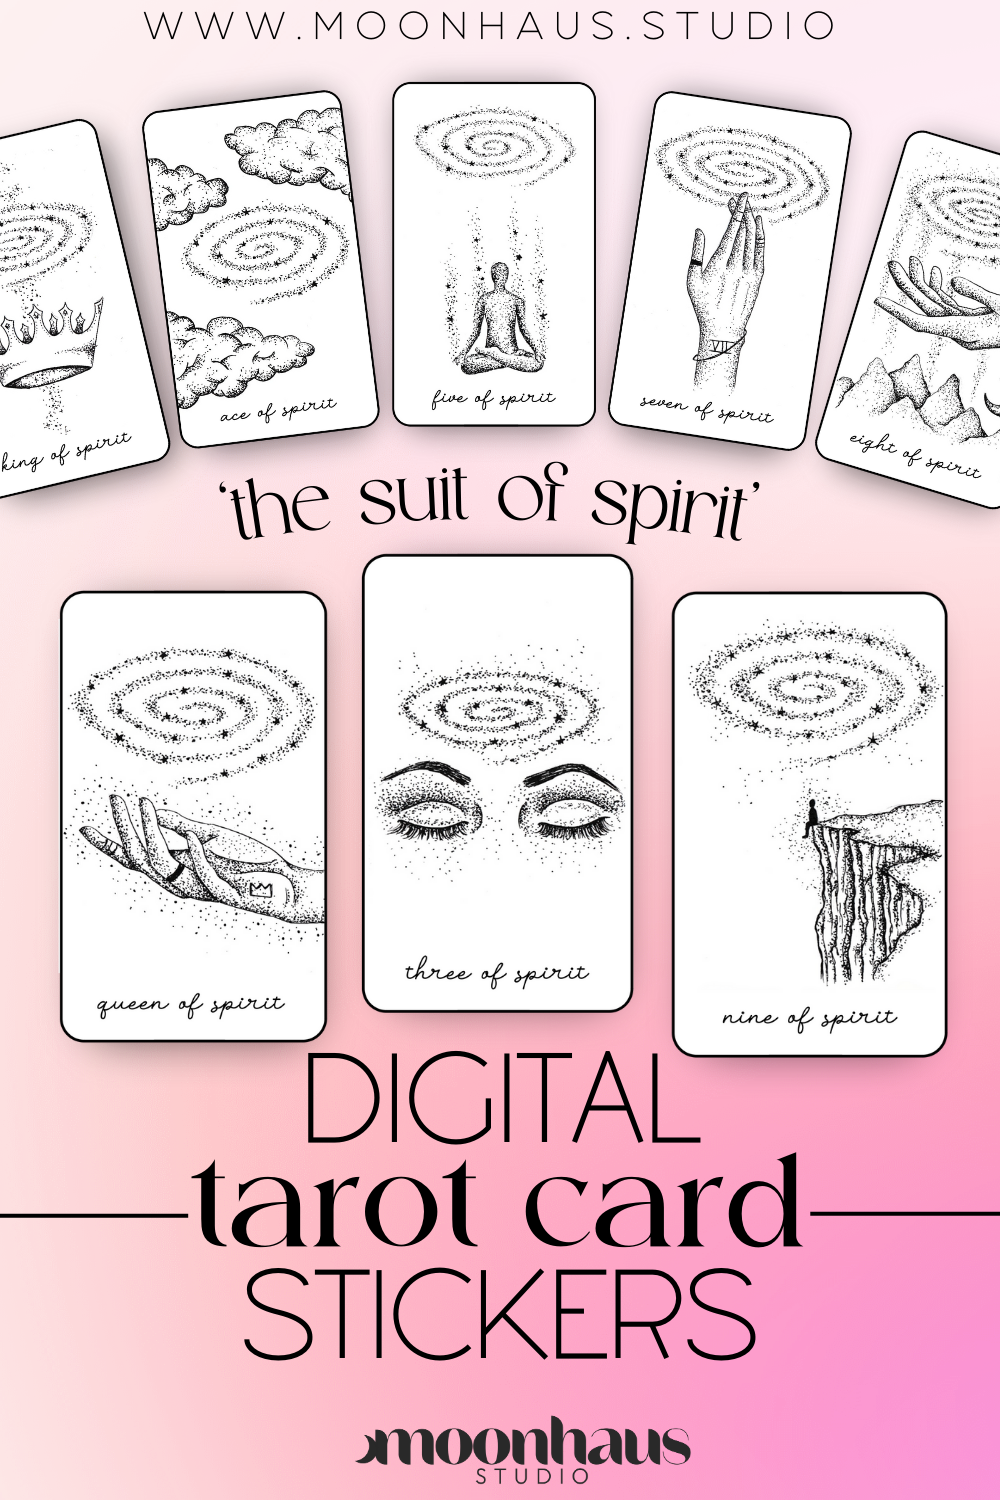 tarot card digital stickers - 14 tarot card designs, hand drawn png